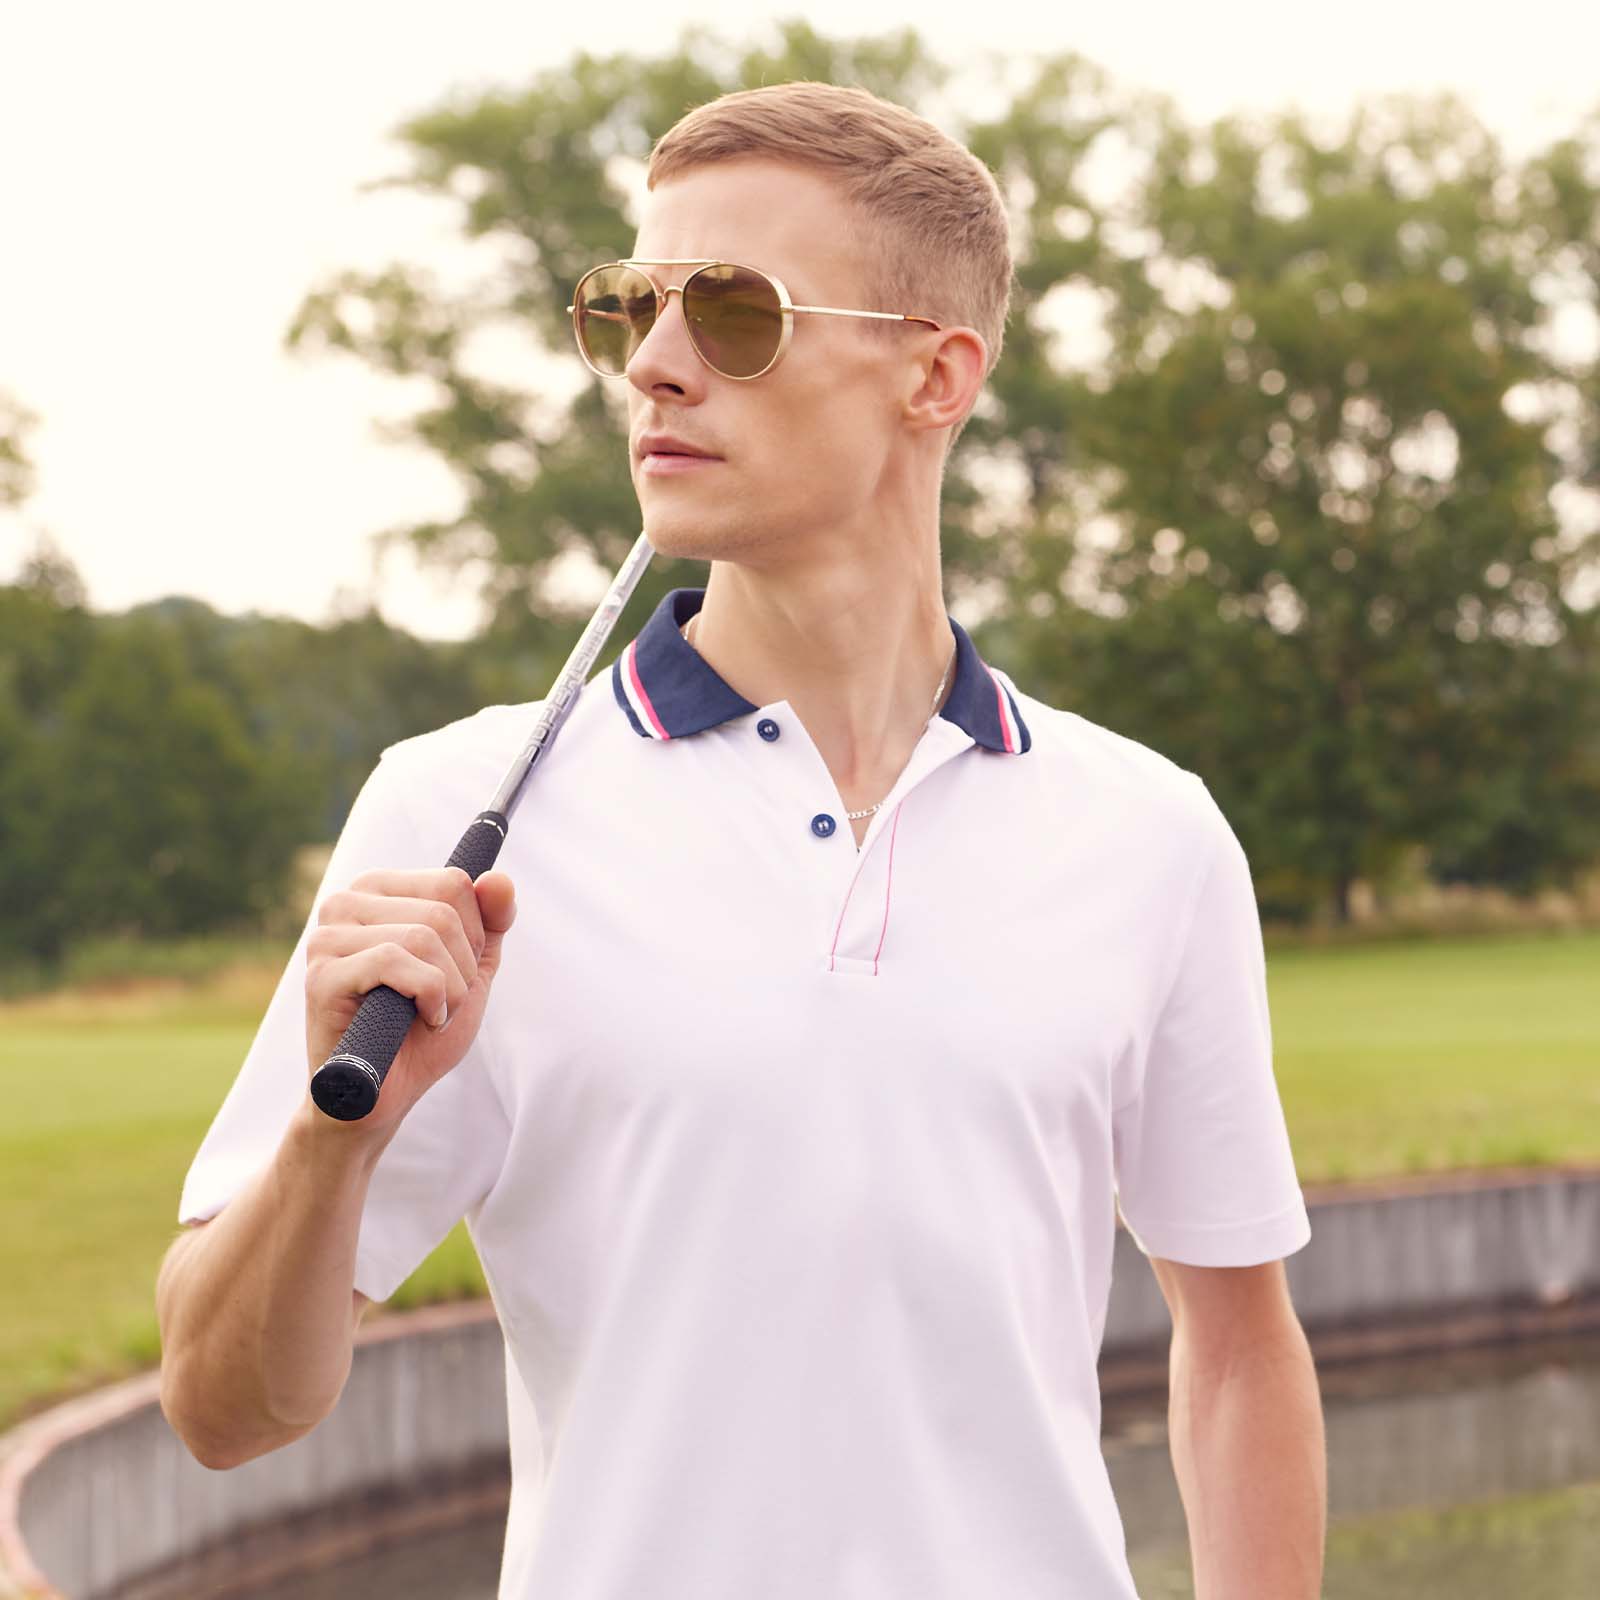 Men's golf polo shirt with sun protection